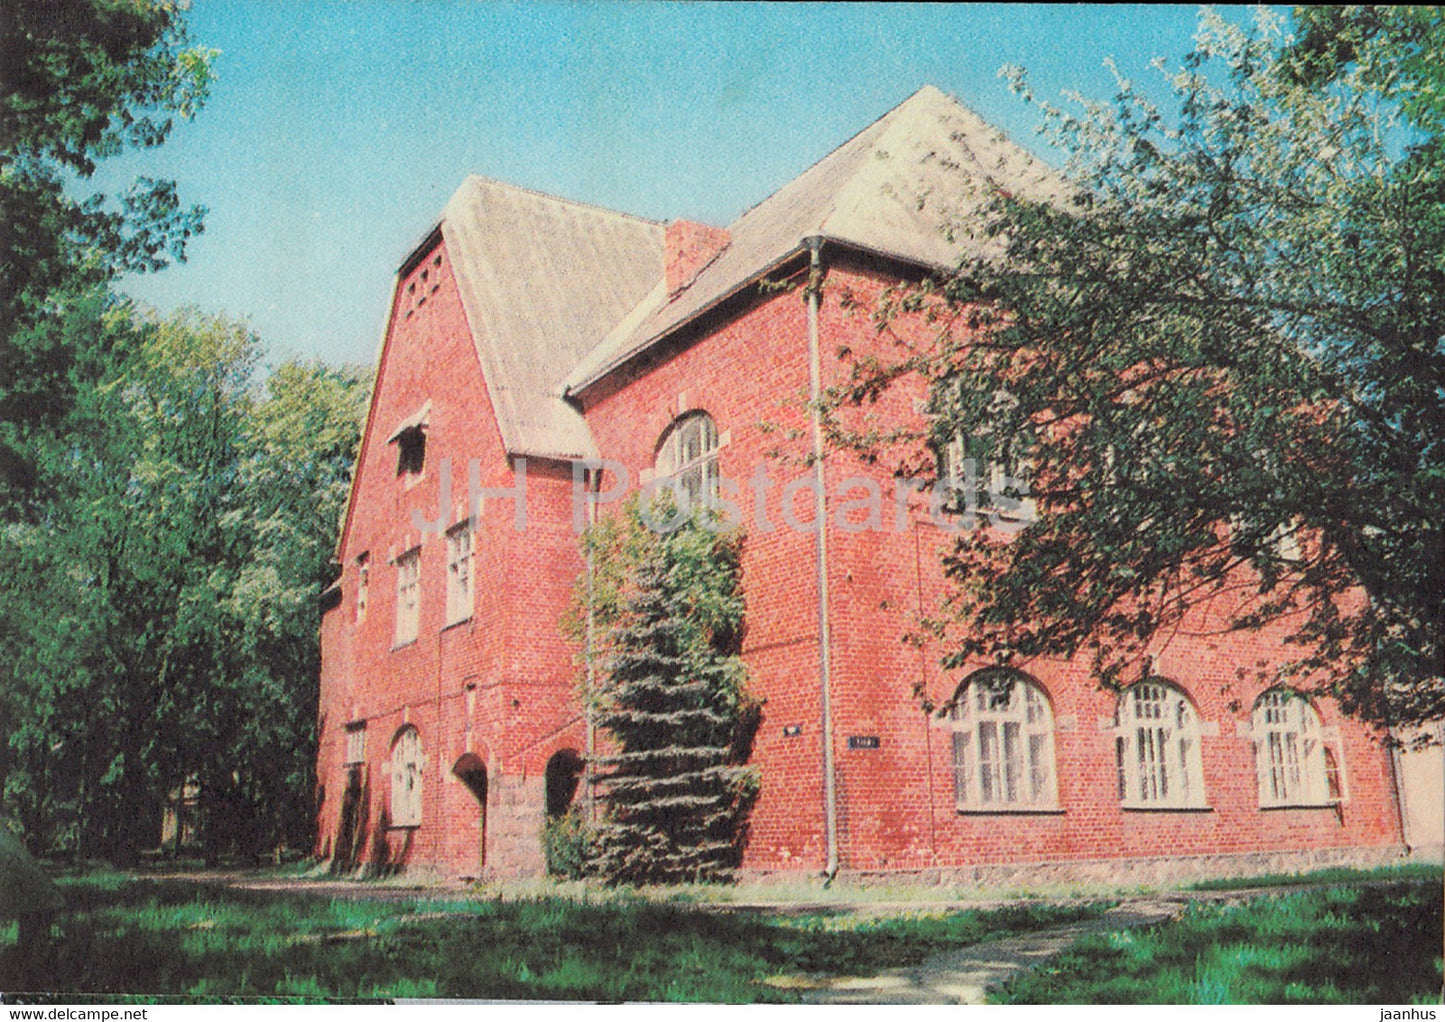 Paide - County Hospital - the former Progymnasium and German gymnasium - 1993 - Estonia - unused - JH Postcards